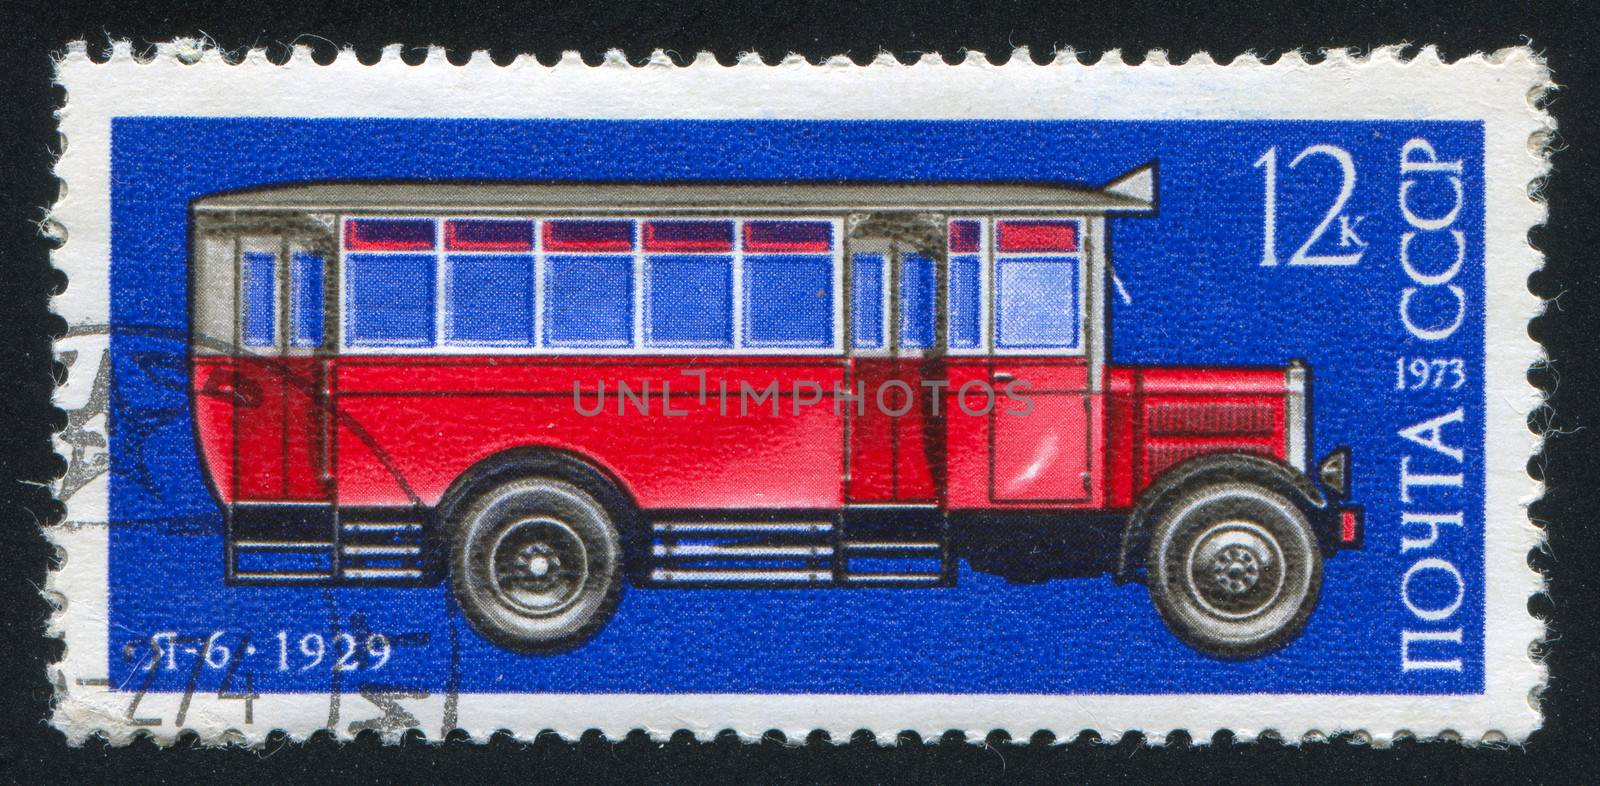 RUSSIA - CIRCA 1973: stamp printed by Russia, shows Ya-6 autobus, circa 1973